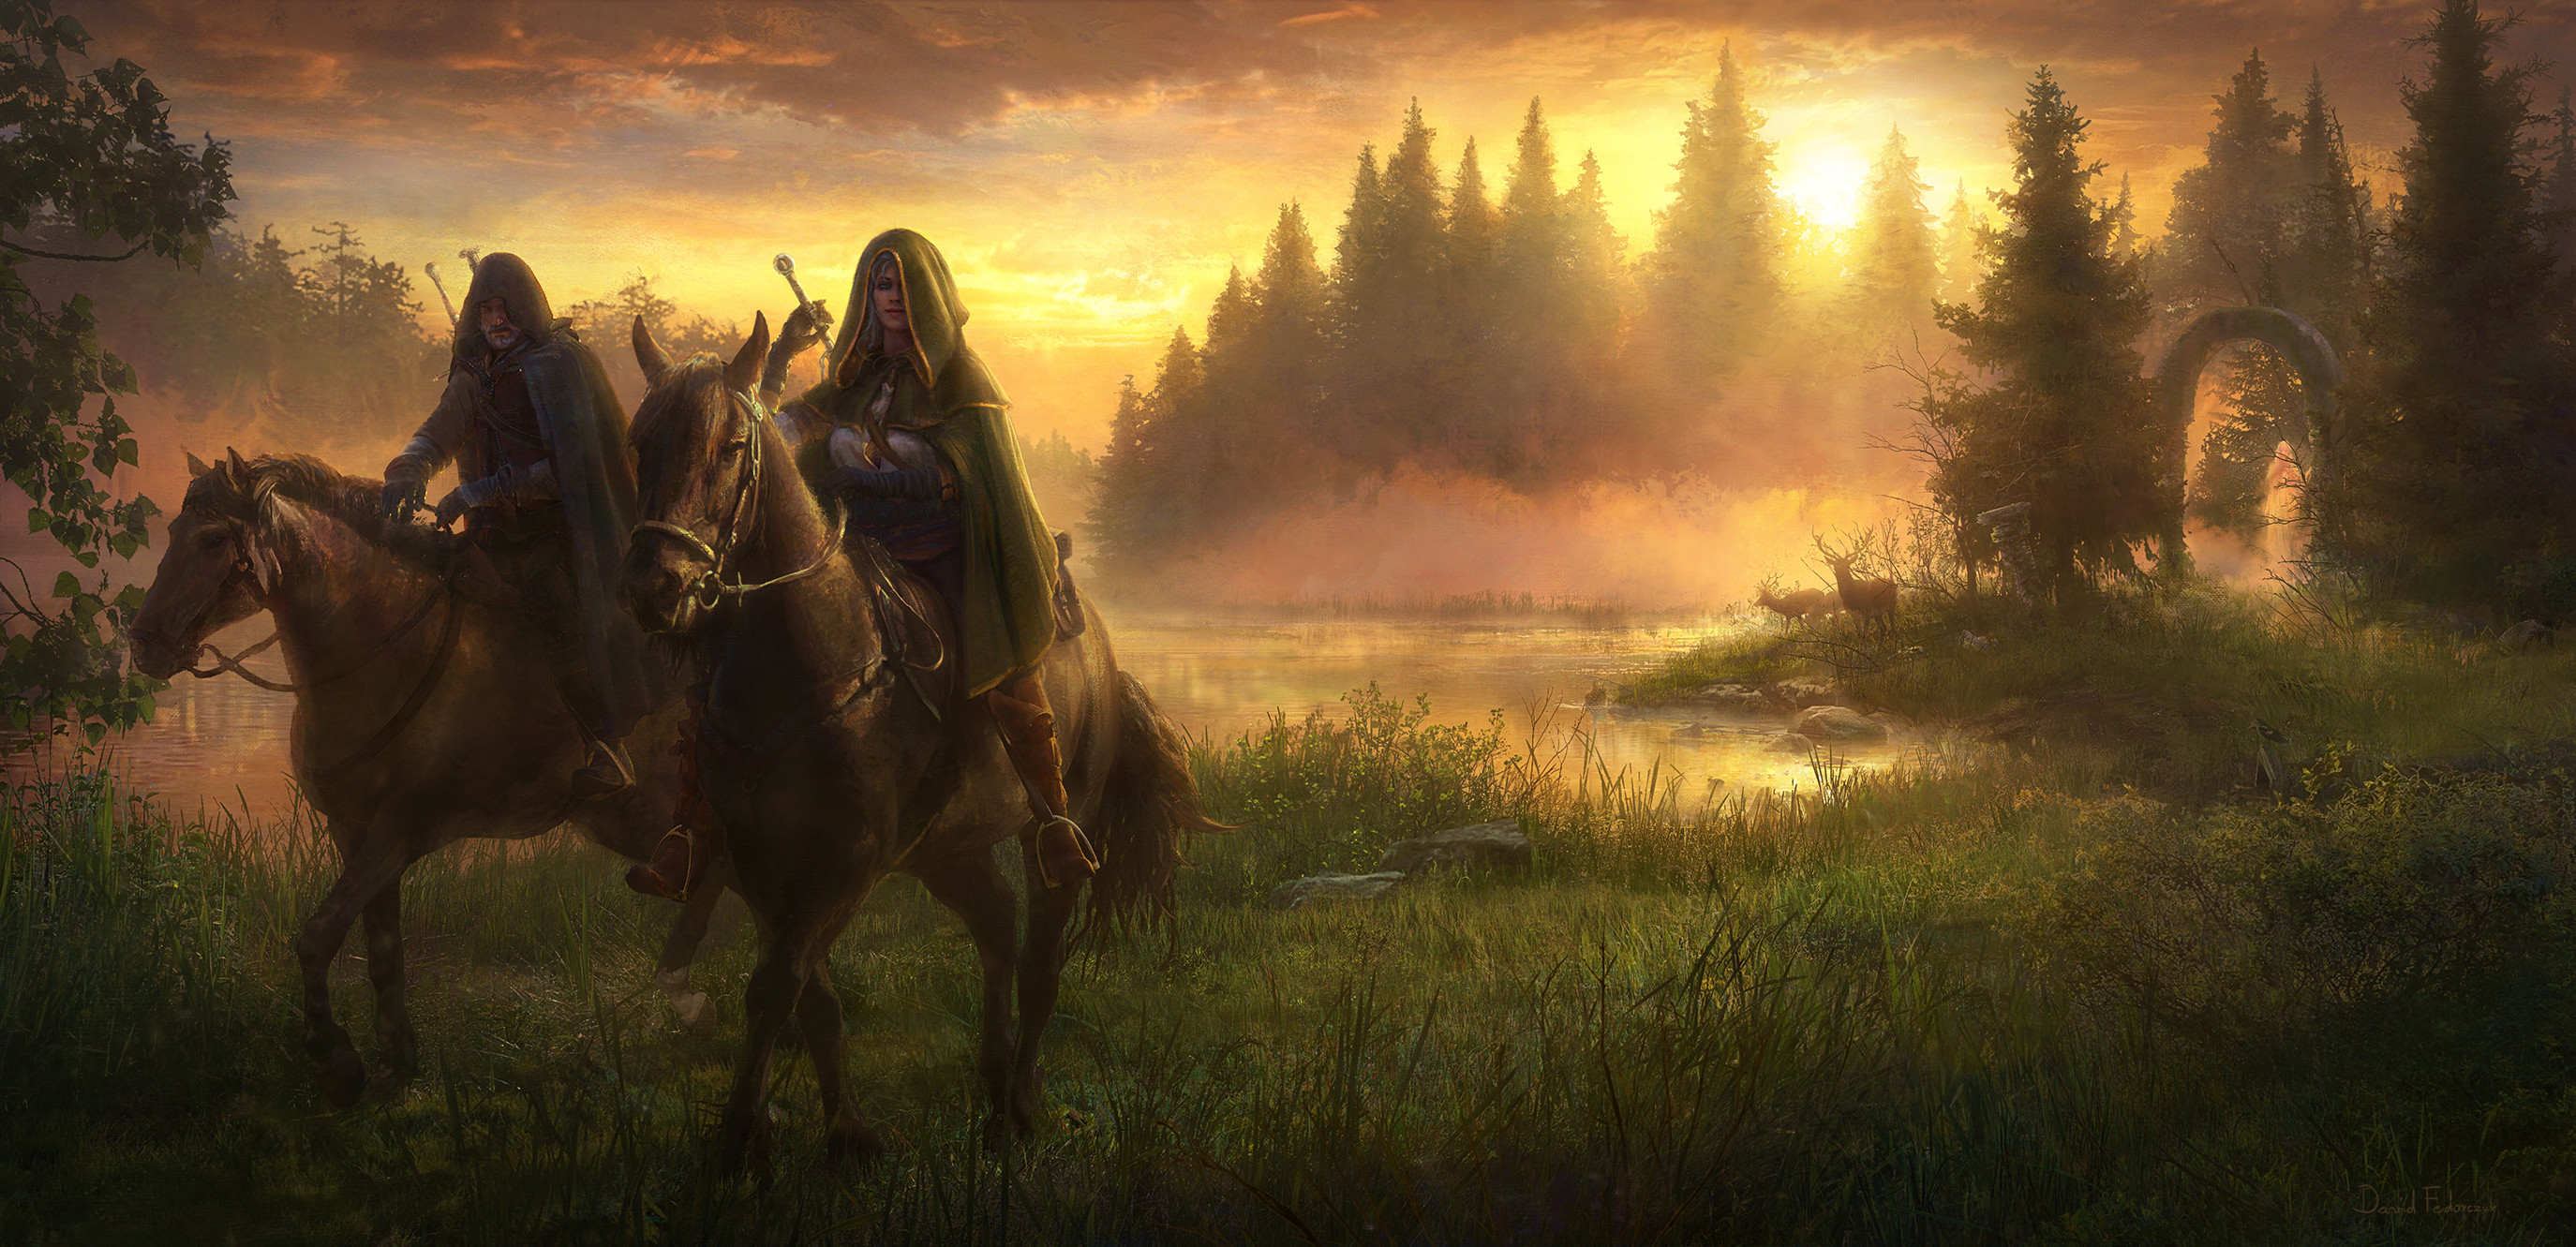 General 2749x1331 Cirilla Fiona Elen Riannon Geralt of Rivia The Witcher horse forest David Fedorczuk digital art